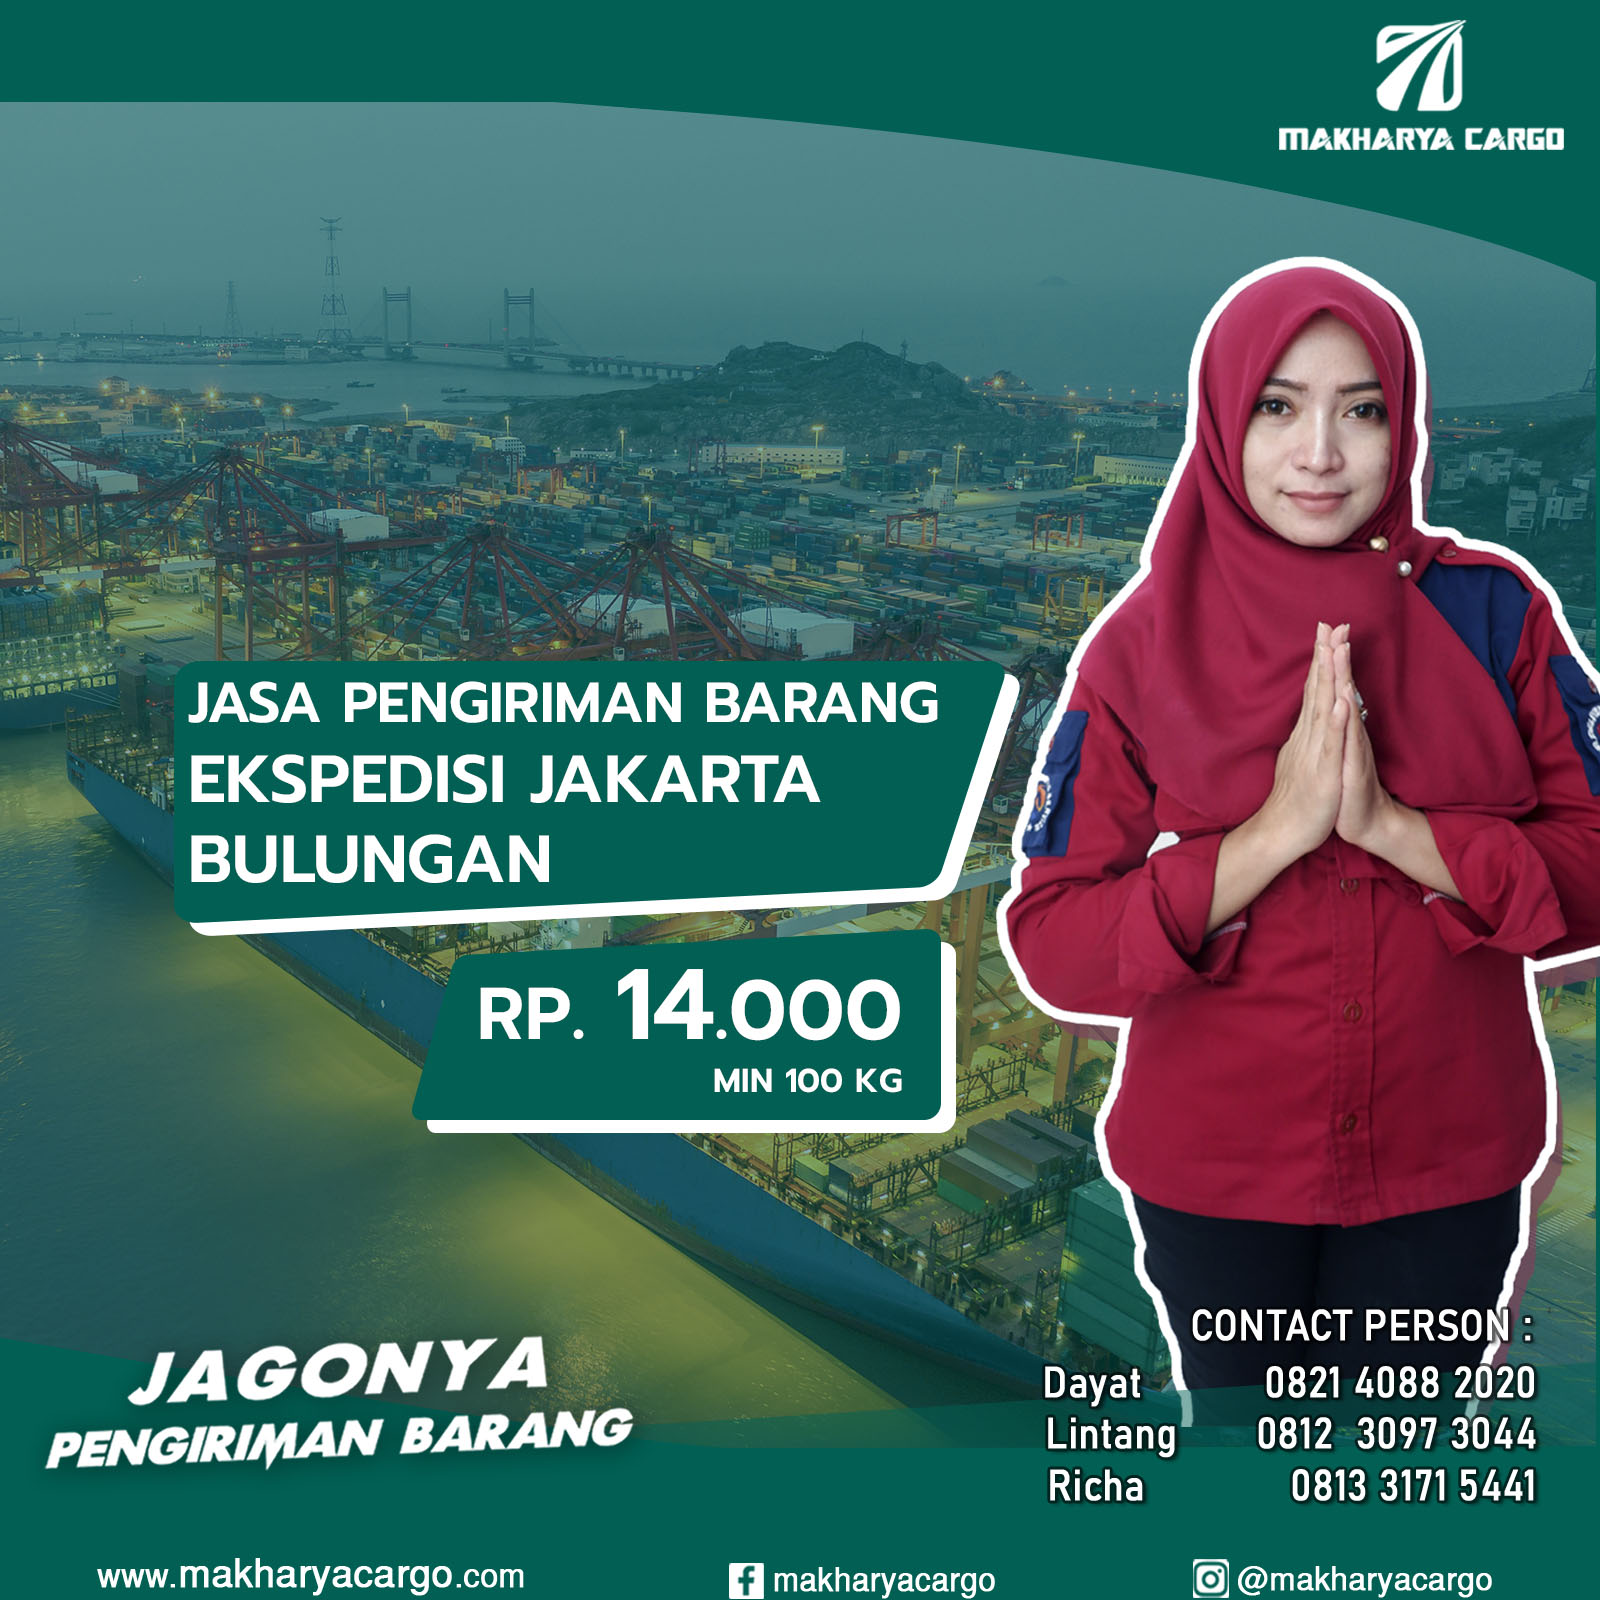 Ekspedisi Jakarta Bulungan